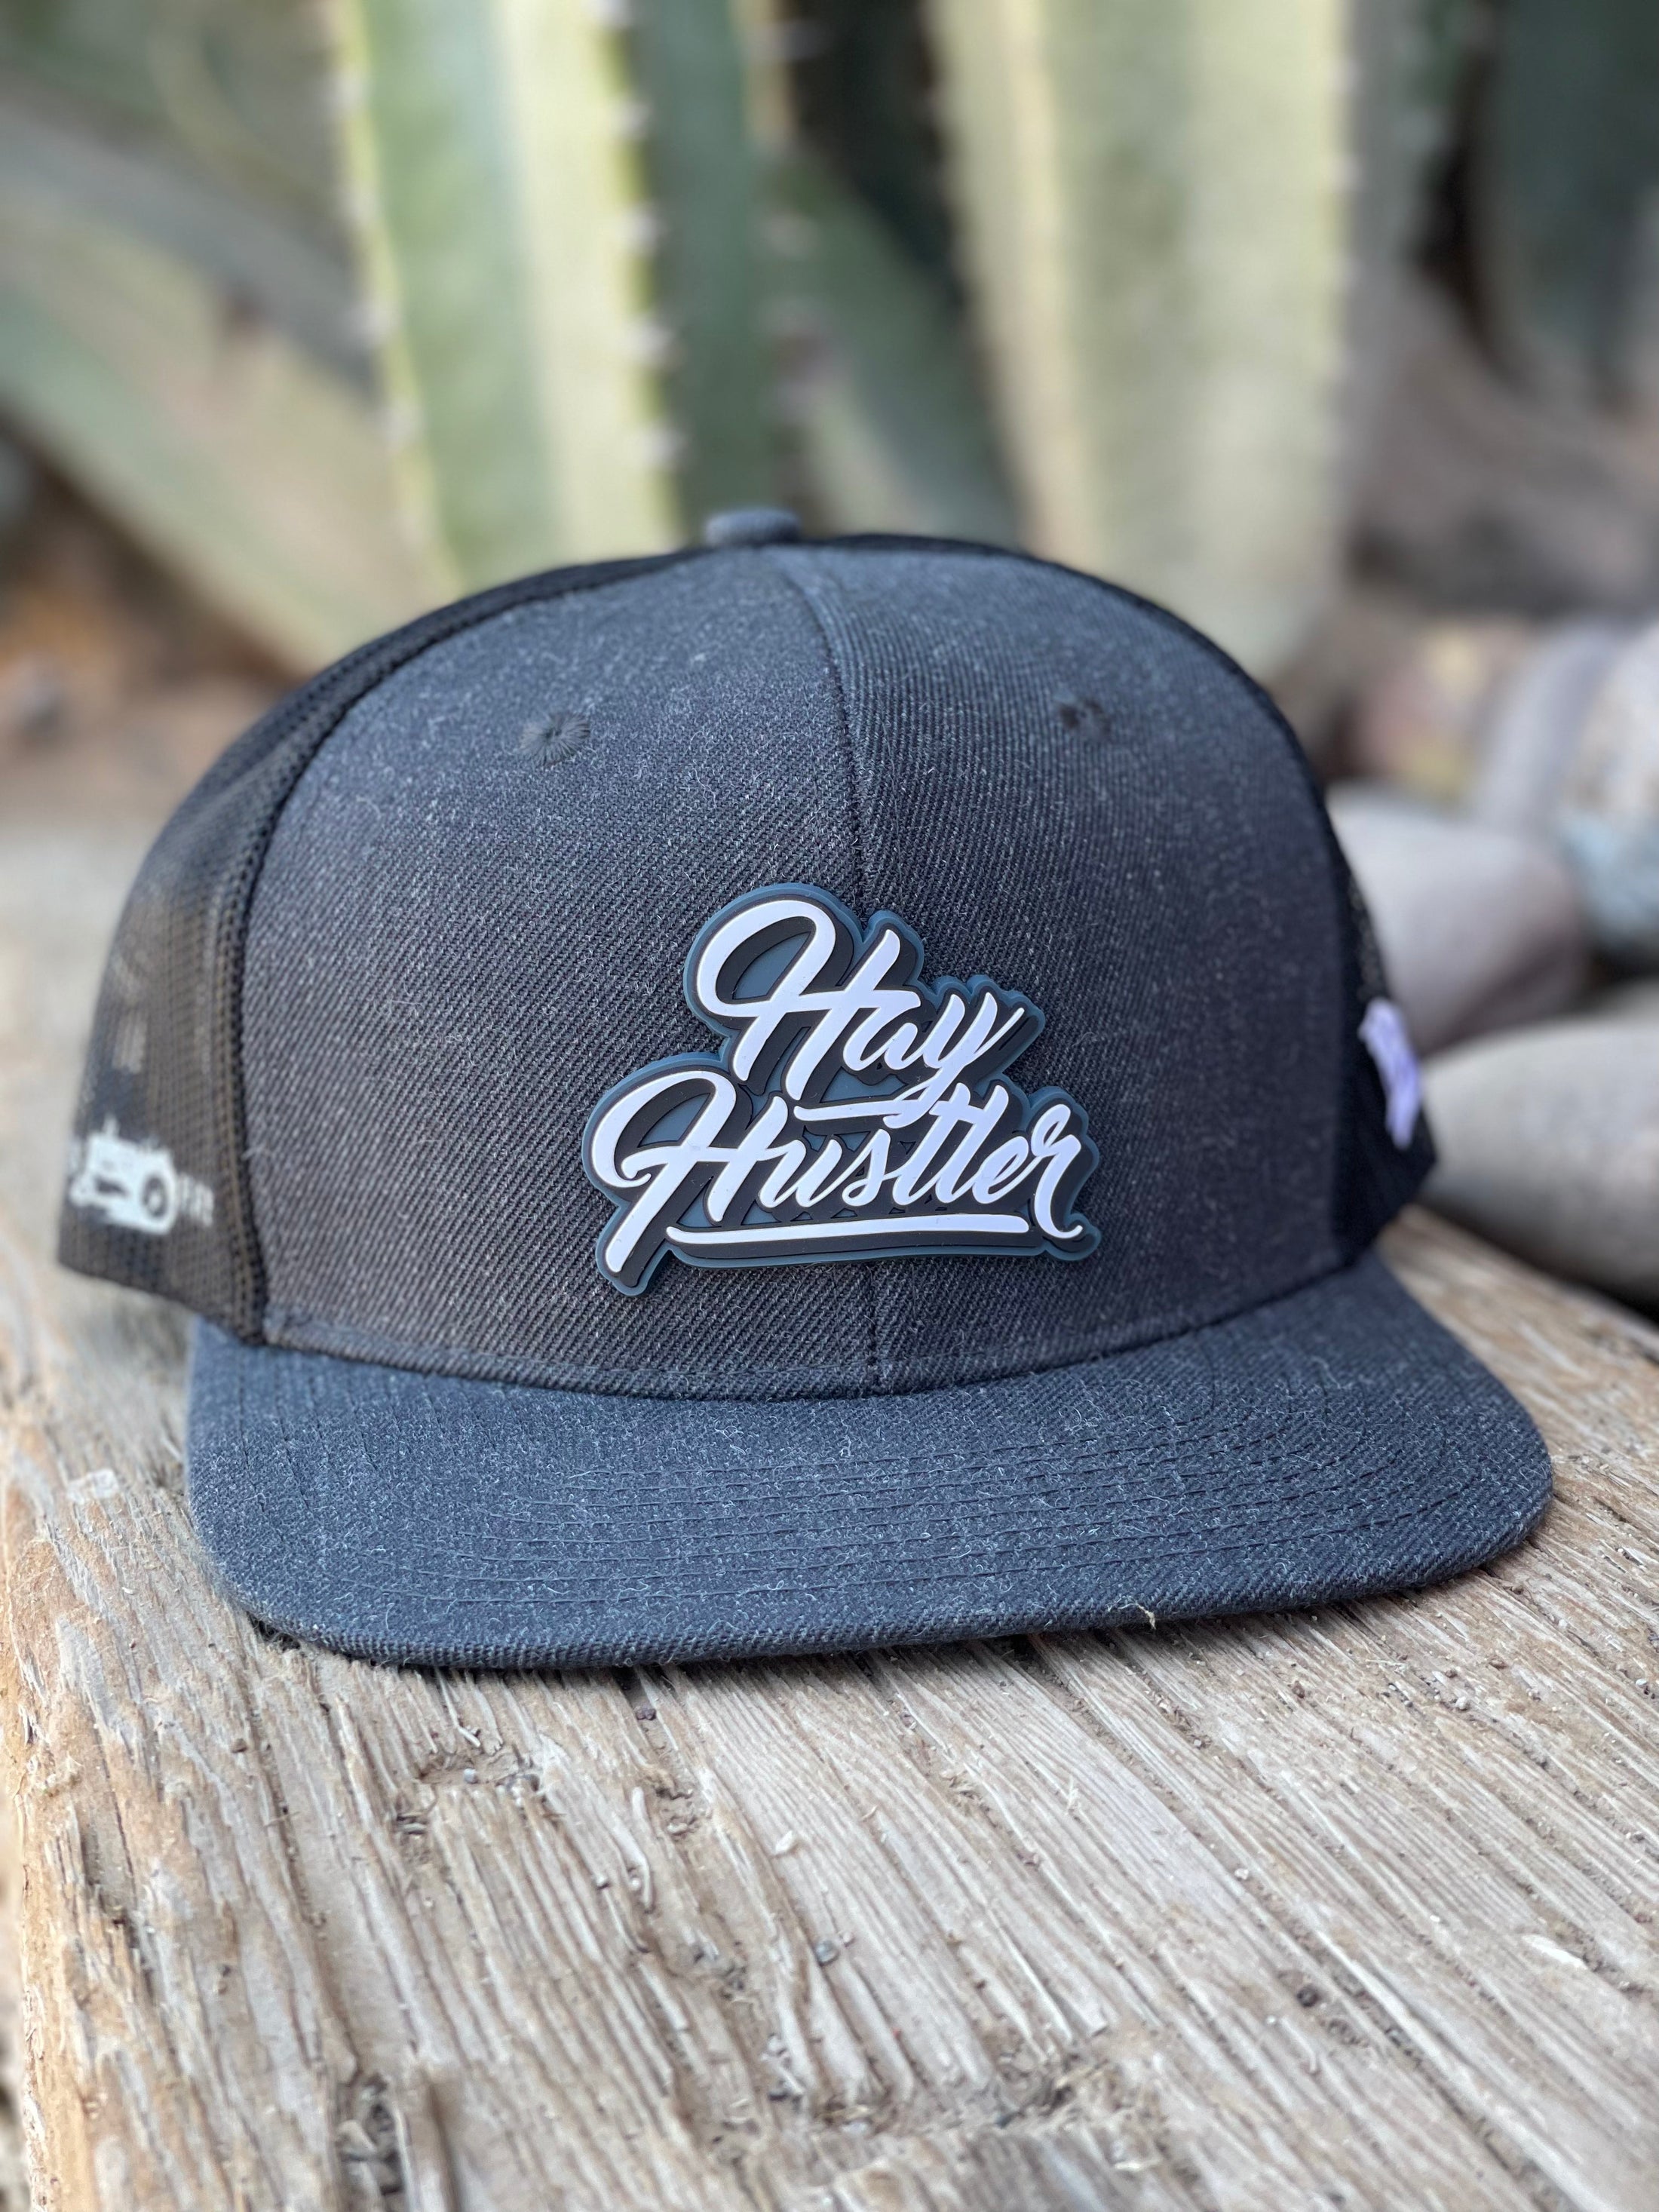 Hay Hustler Stamp Hat Flat Bill